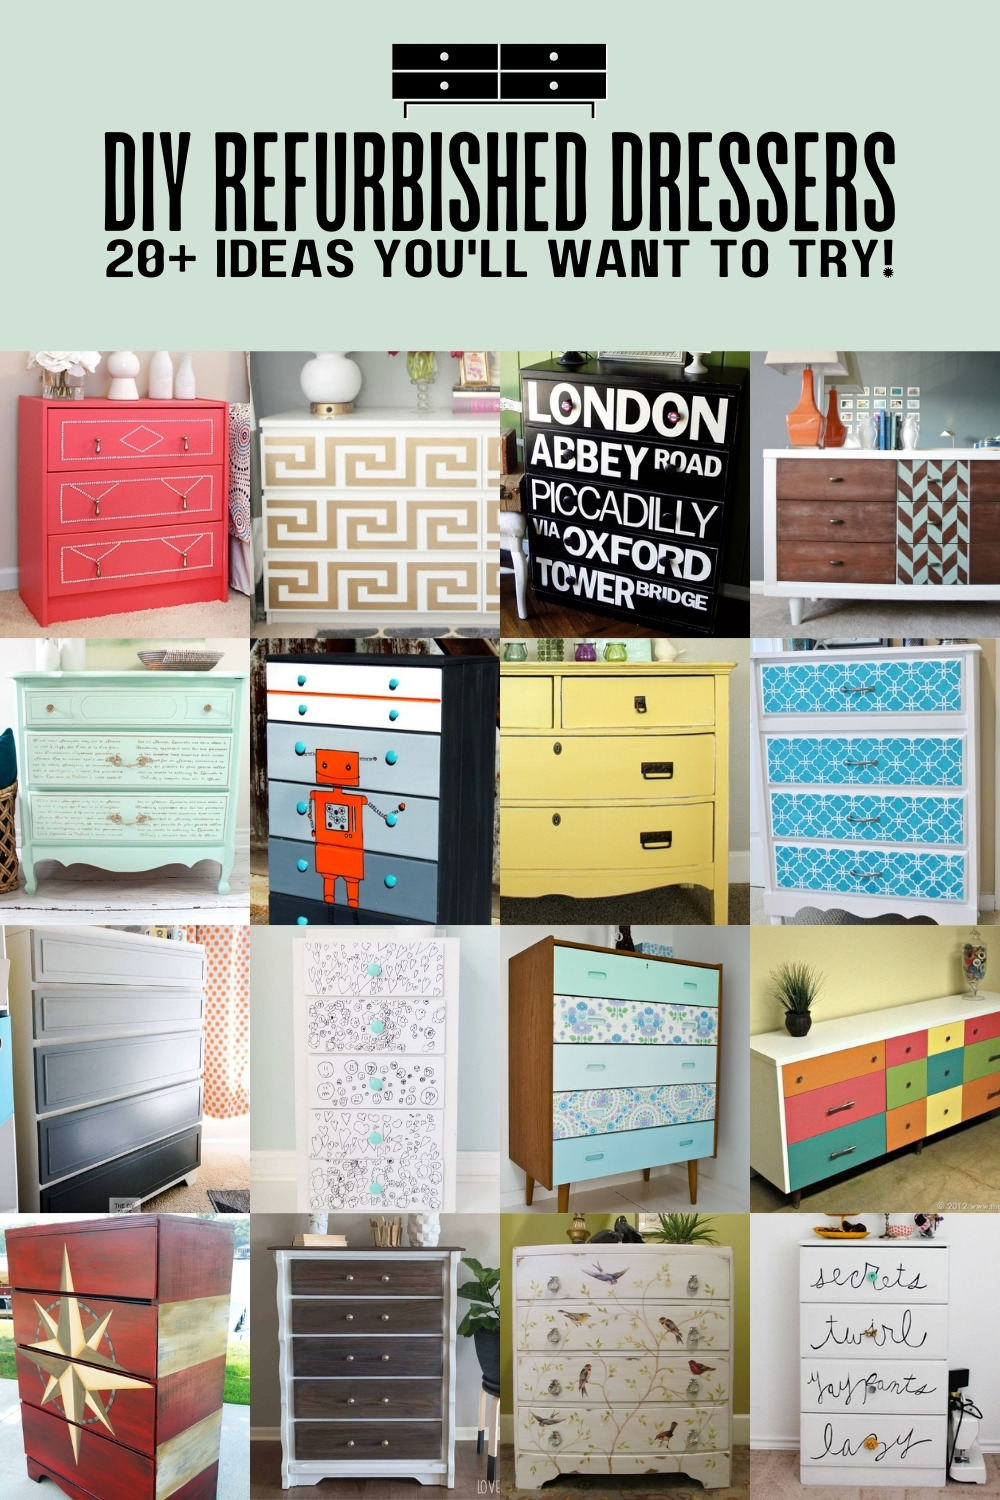 Refurbished Dresser Ideas: Over 20 DIY Projects